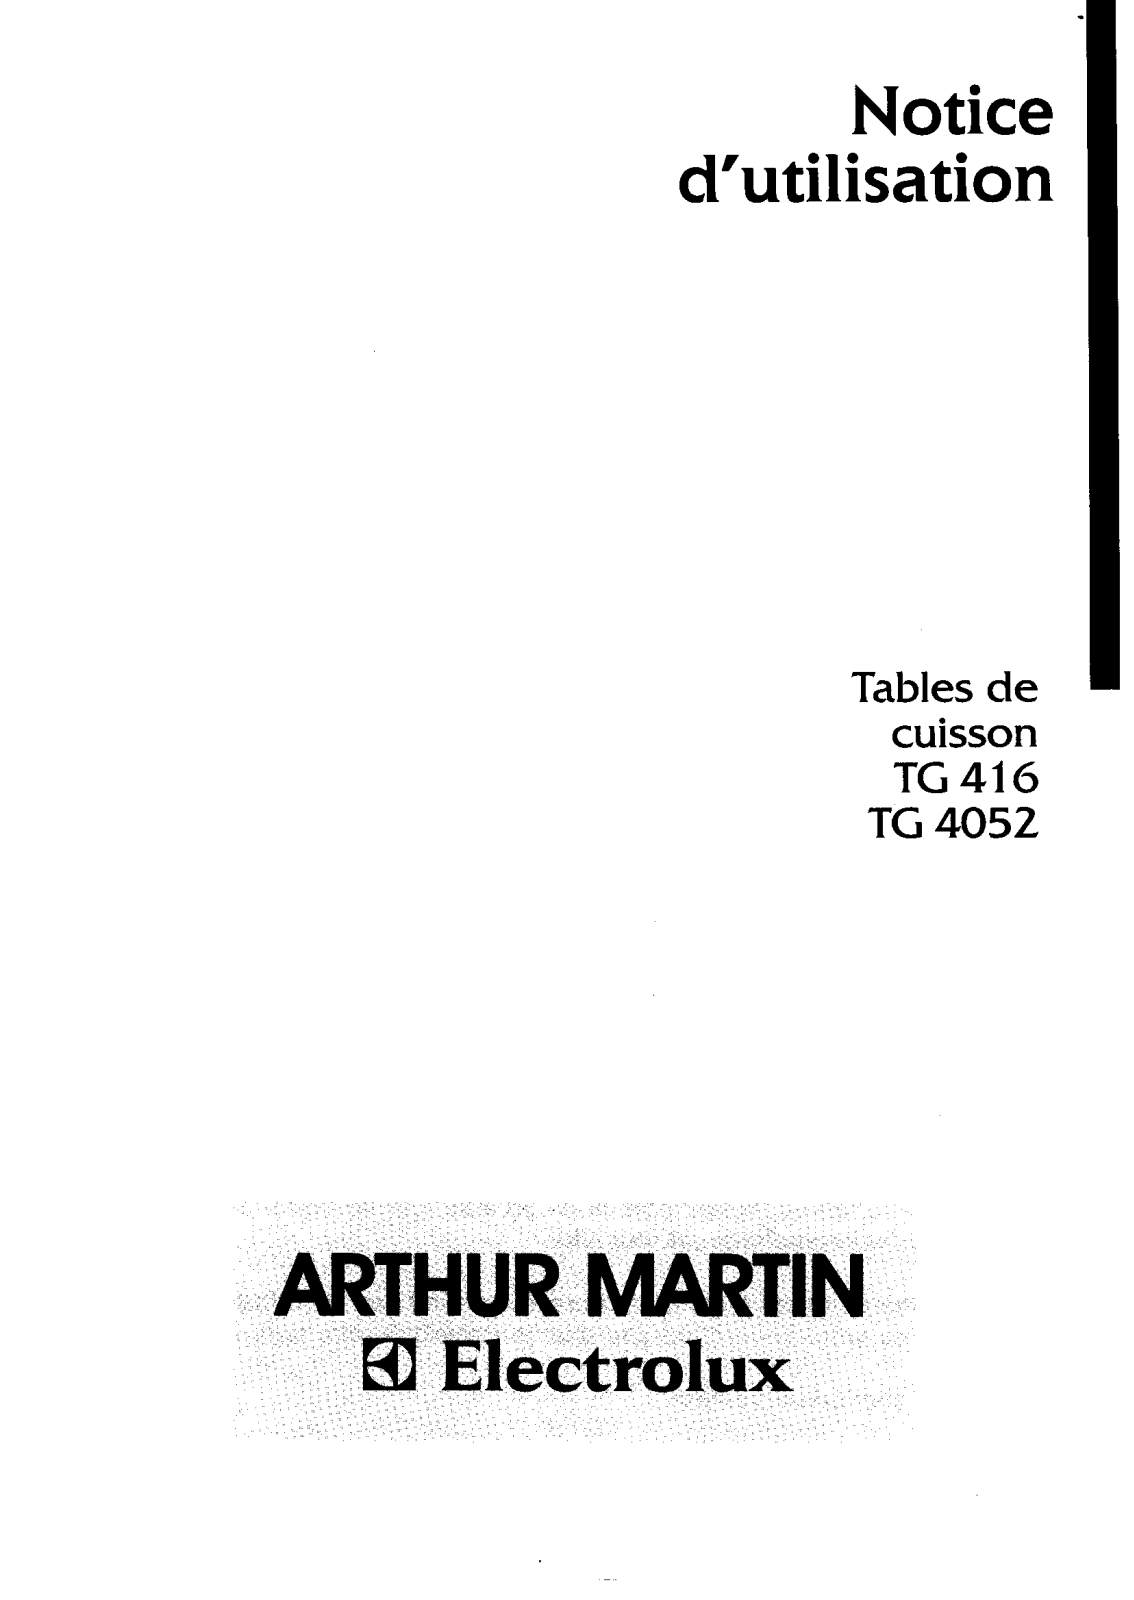 Arthur martin TG4052, TG416 User Manual